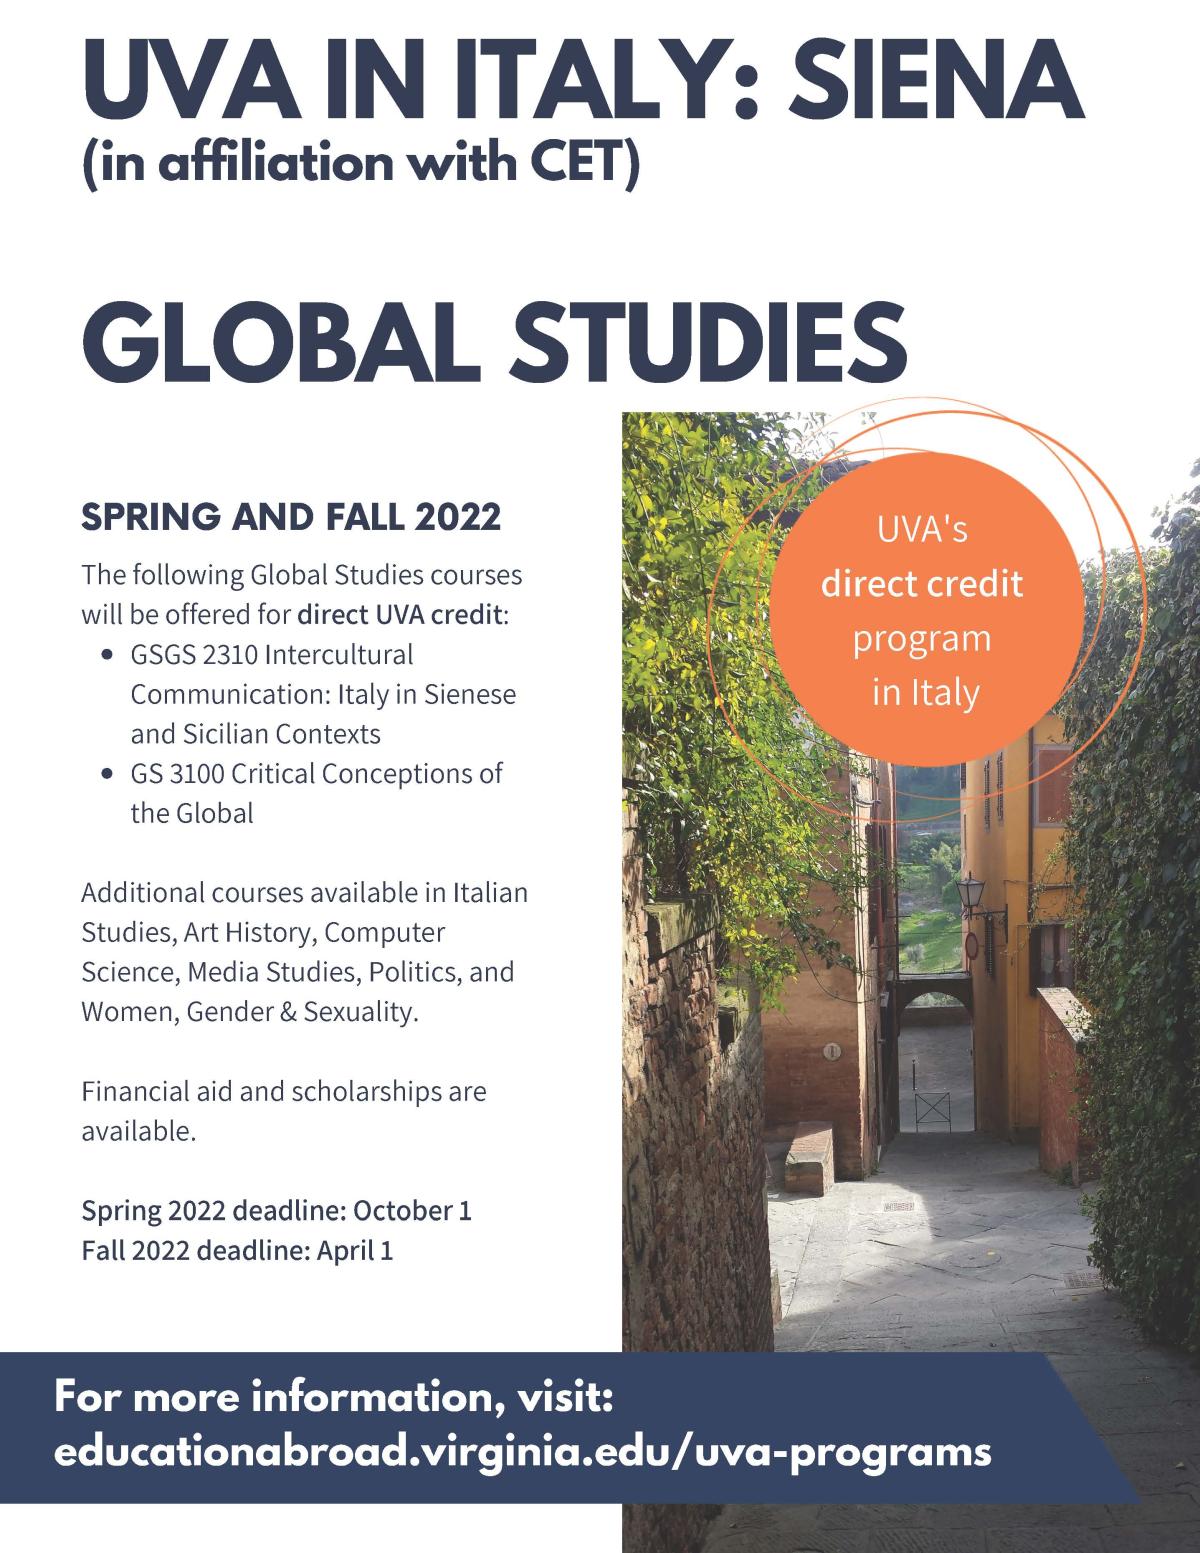 UVa in Italy: Siena Global Studies Courses 2022